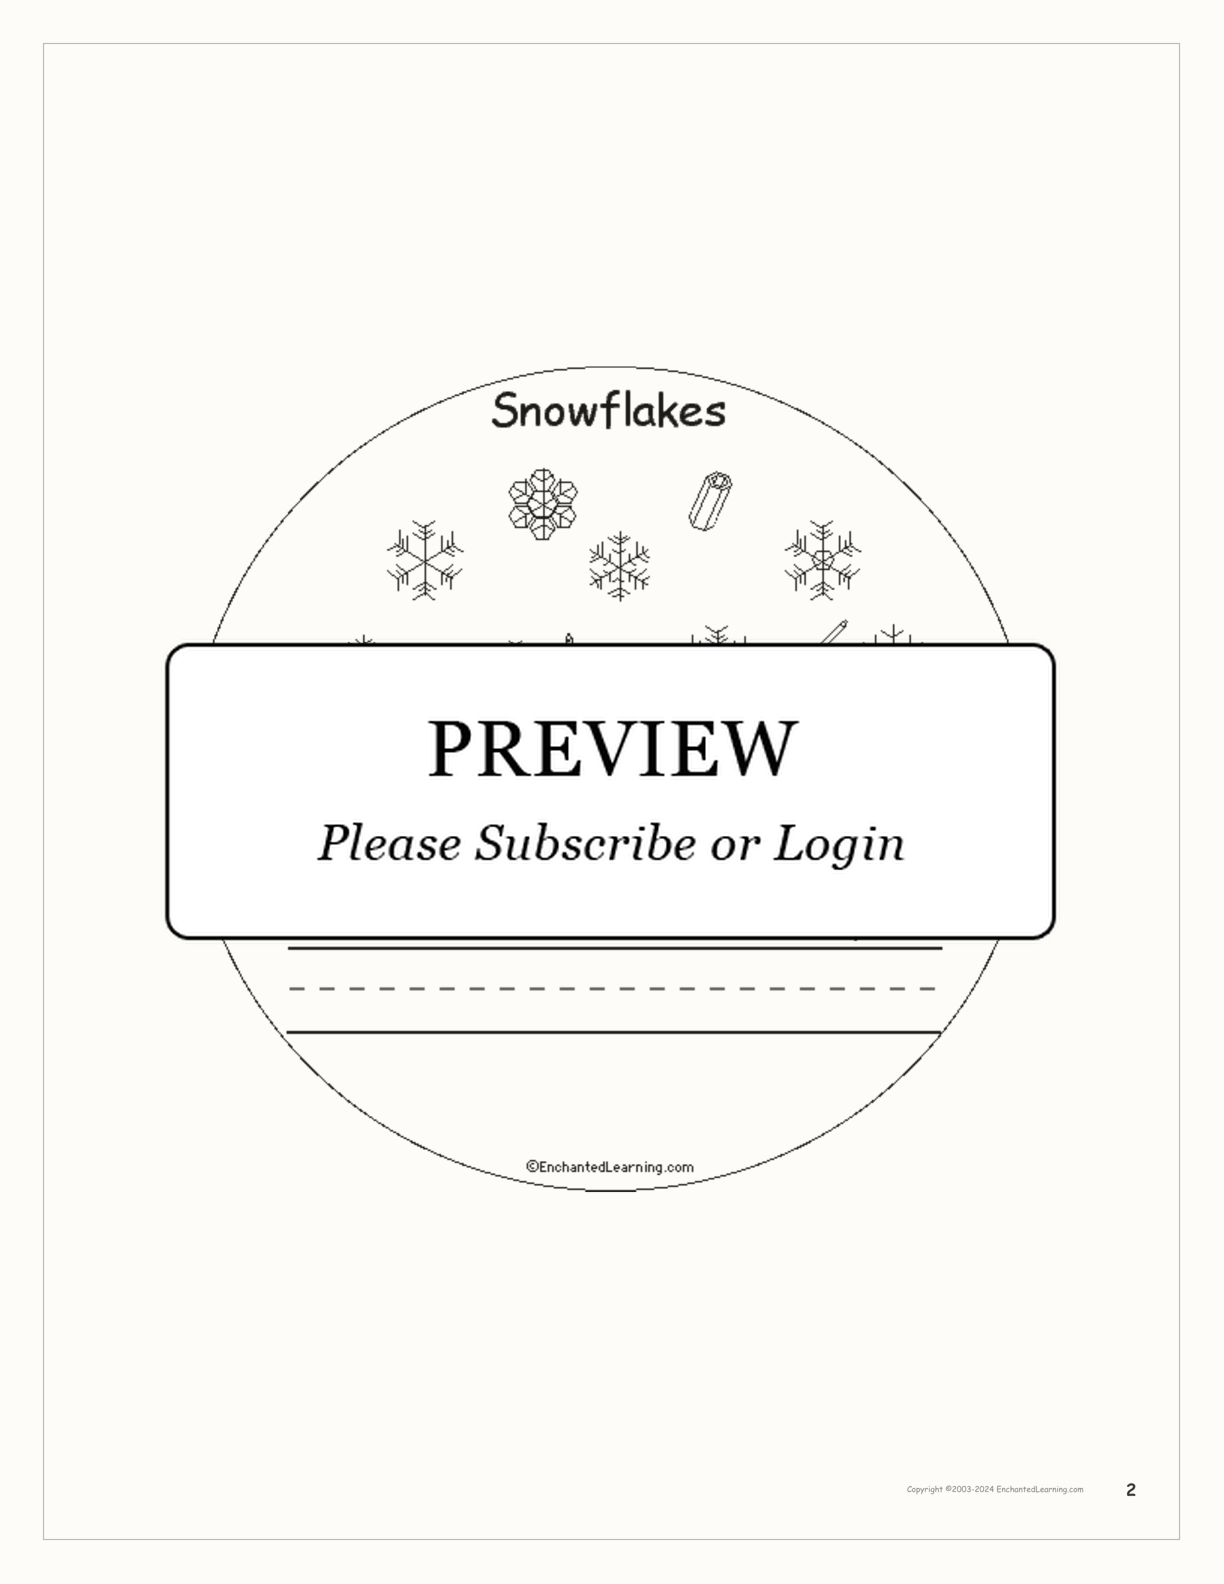 Snowflakes Book interactive printout page 2